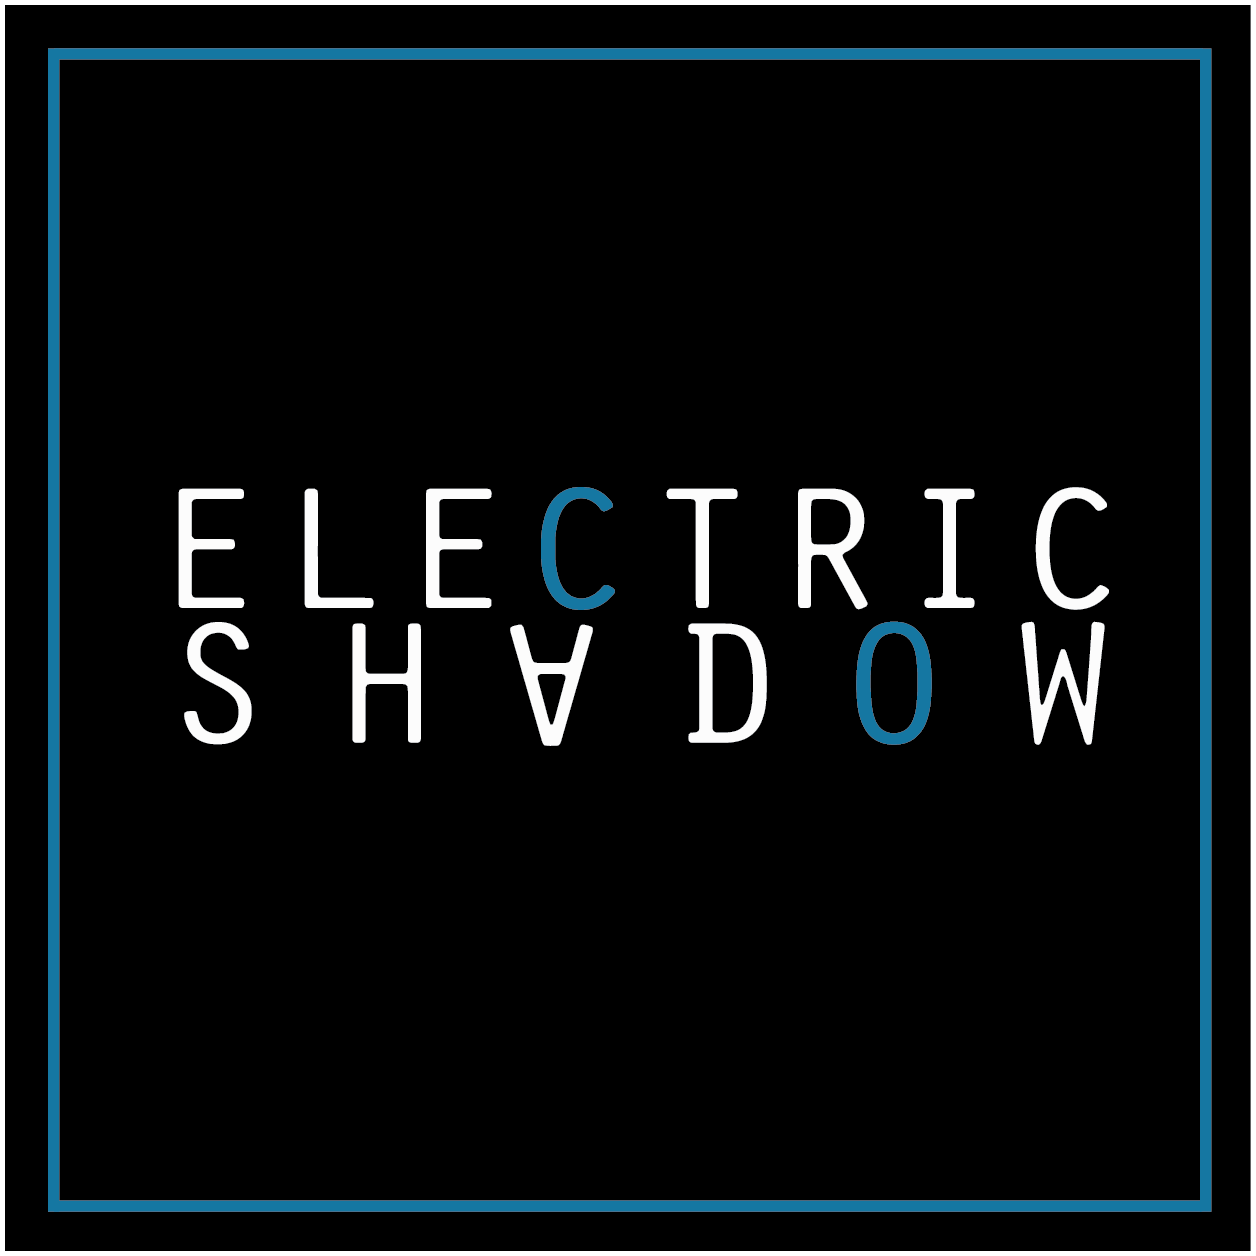 Face Shadow Company Logo - PEOPLE — ELECTRIC SHADOW COMPANY